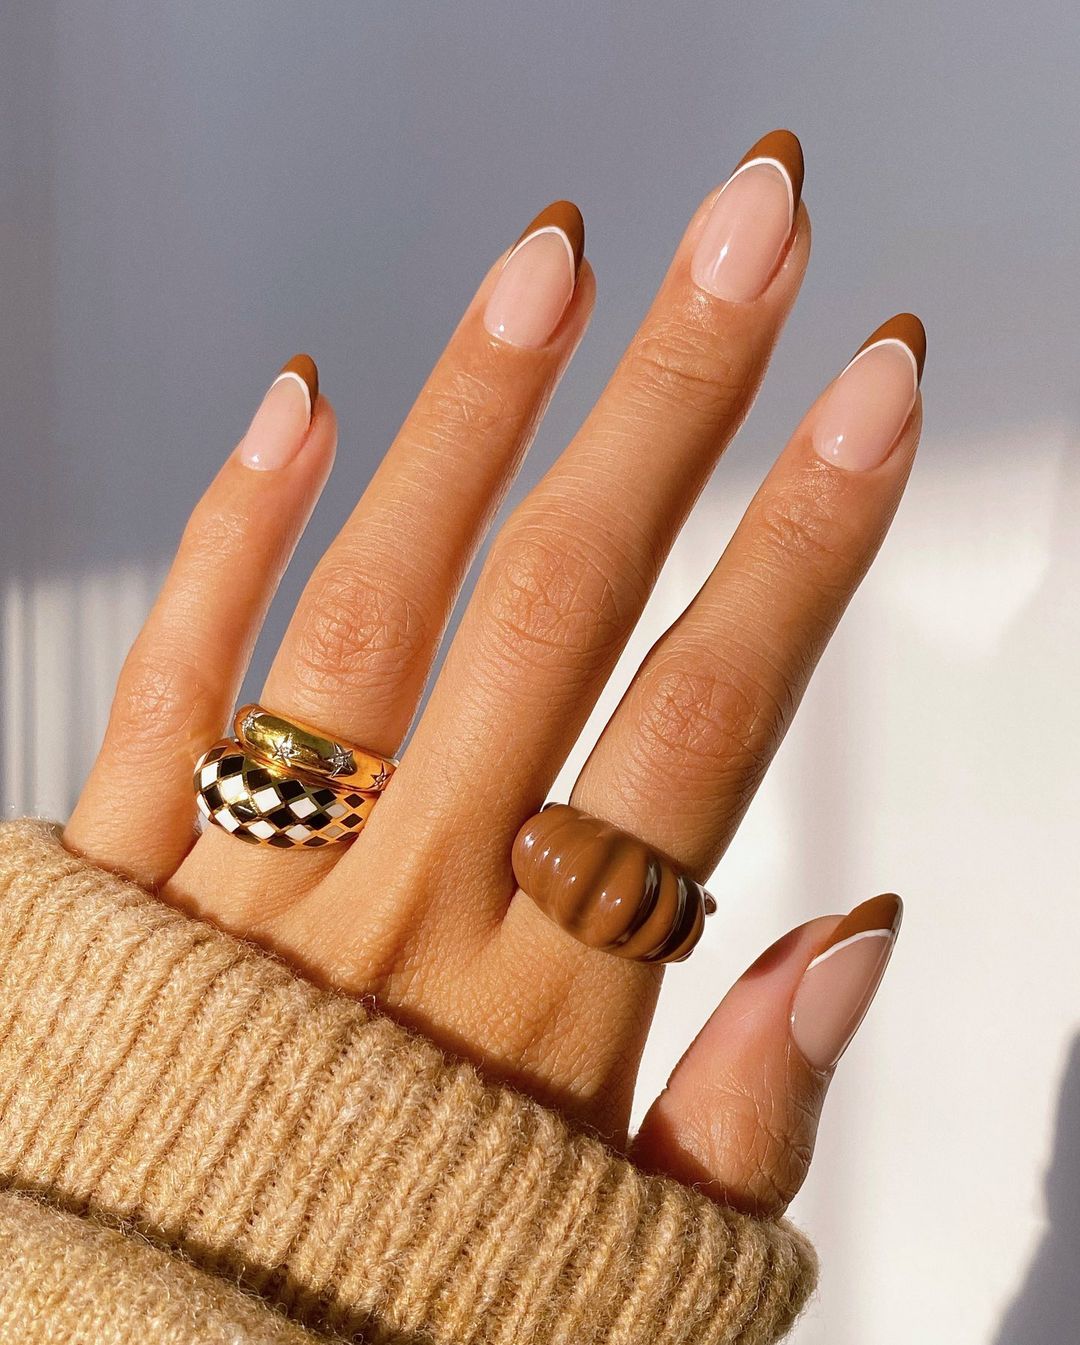 Latte nails: Το manicure trend που θα ερωτευτείς αυτό το φθινόπωρο